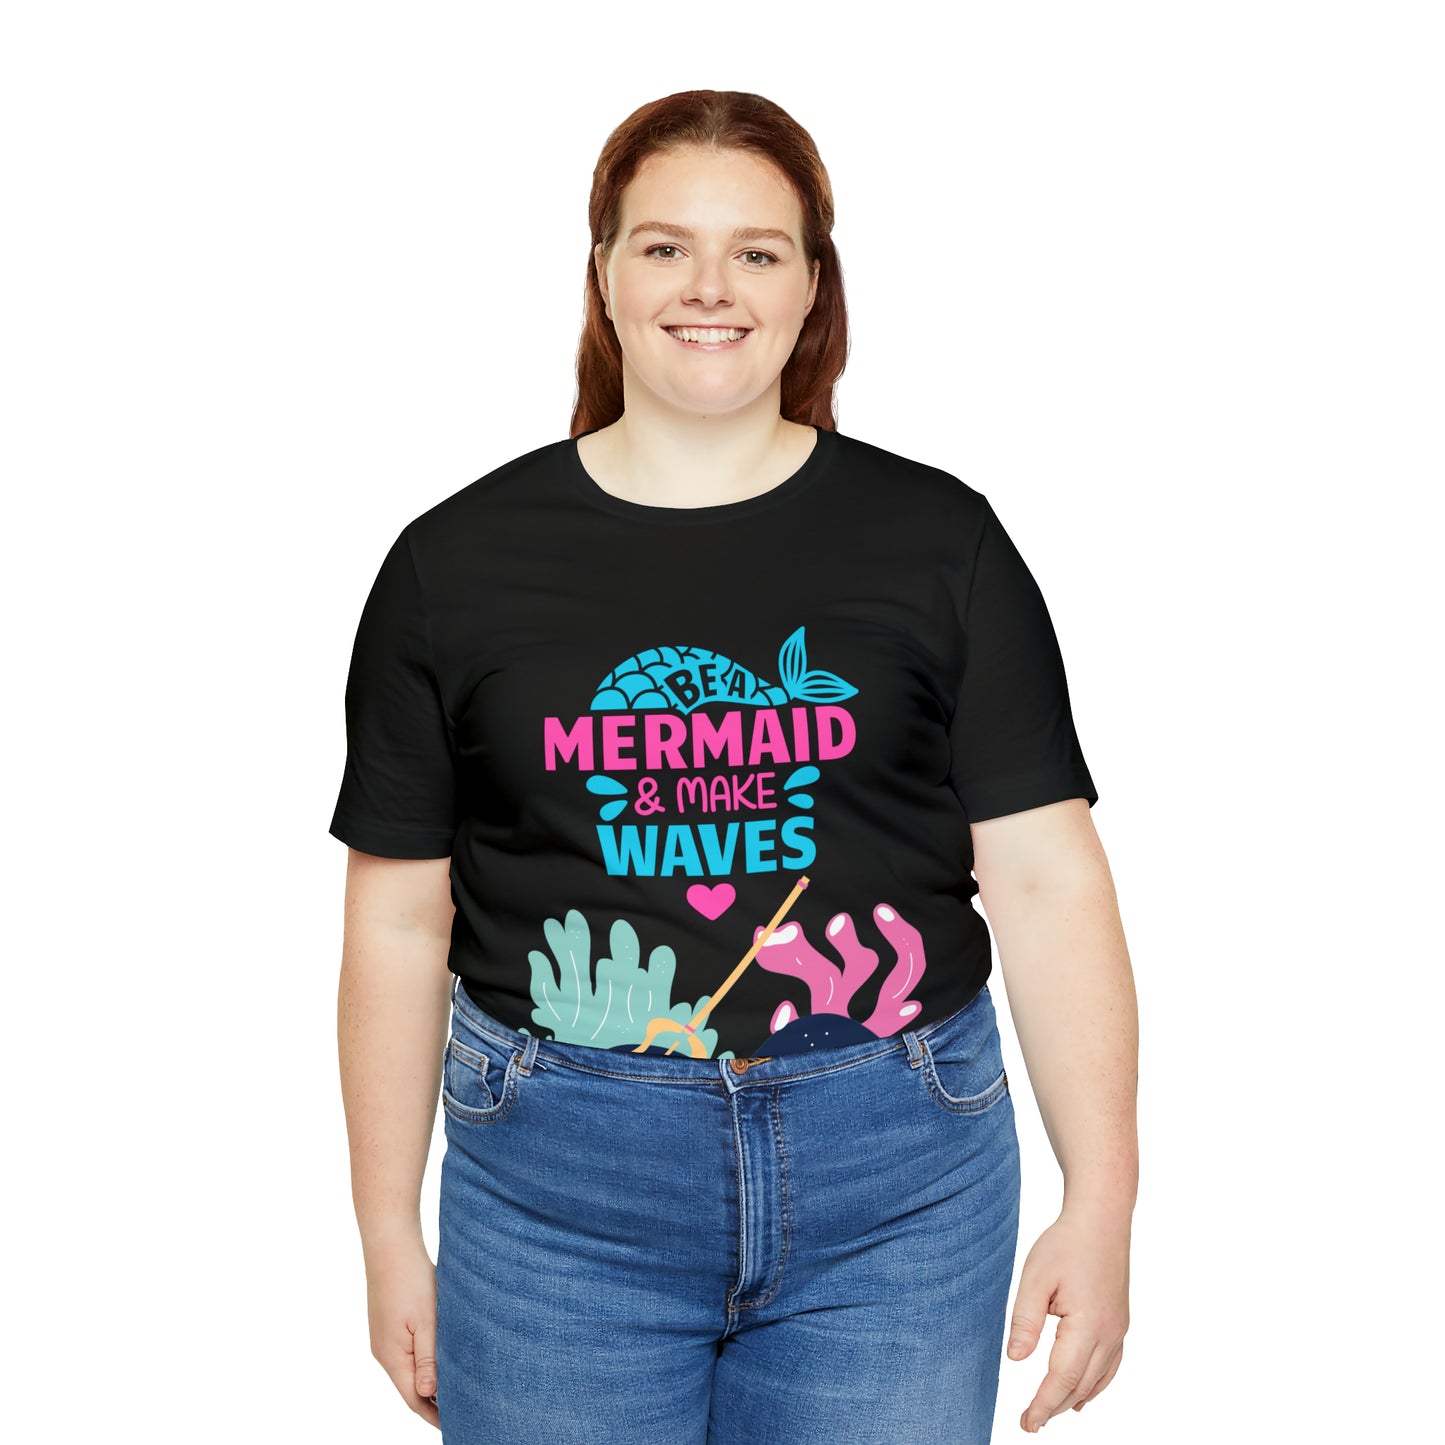 Mermaid Waves T-shirt